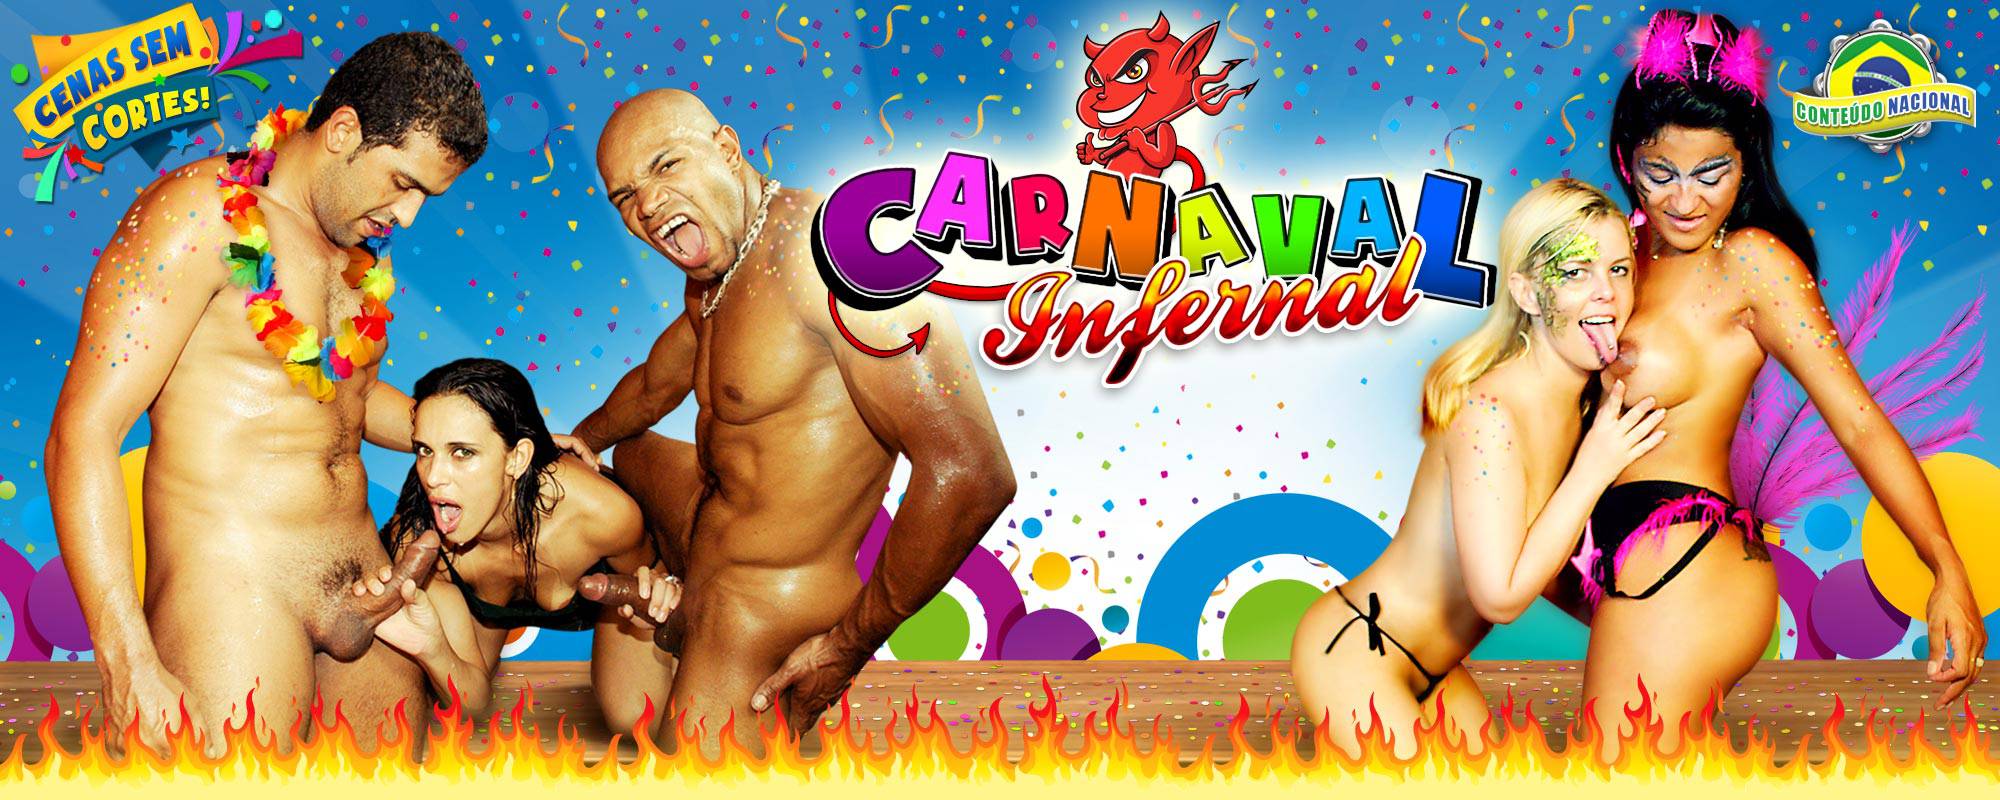 Carnaval Porno 17